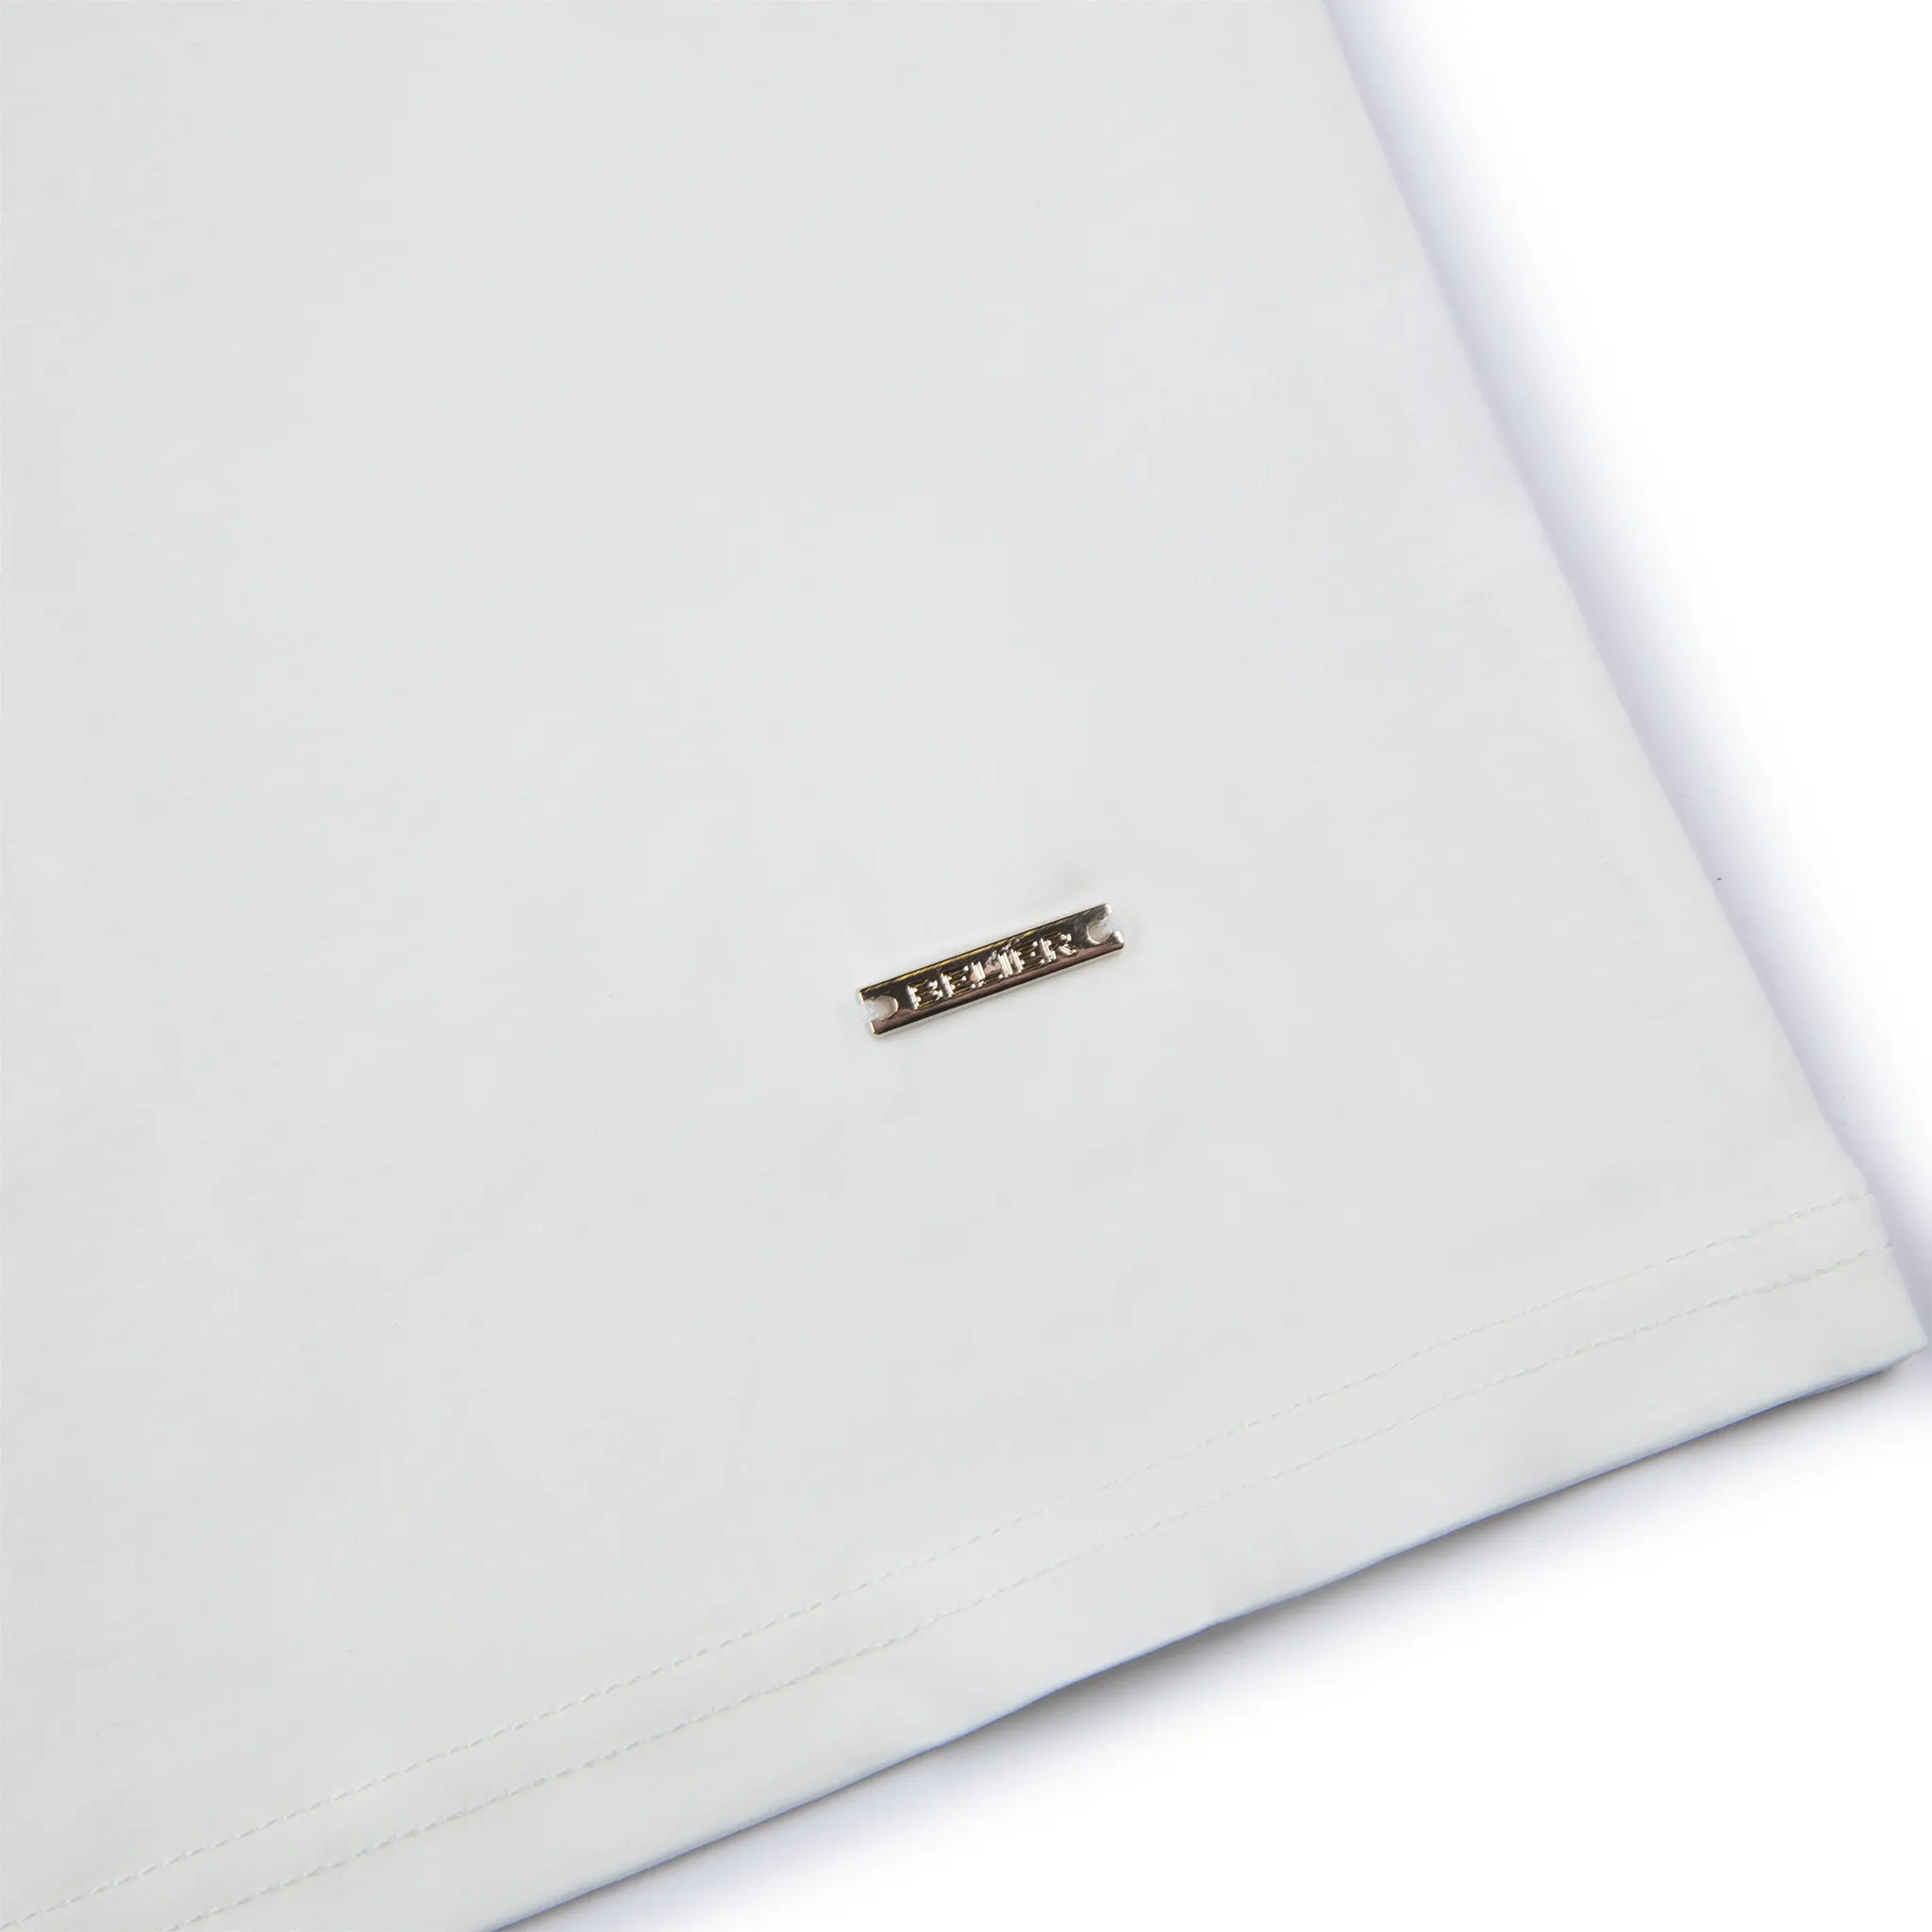 Detail view of Belier Illusion Print White Light Blue Pocket T Shirt BM-192